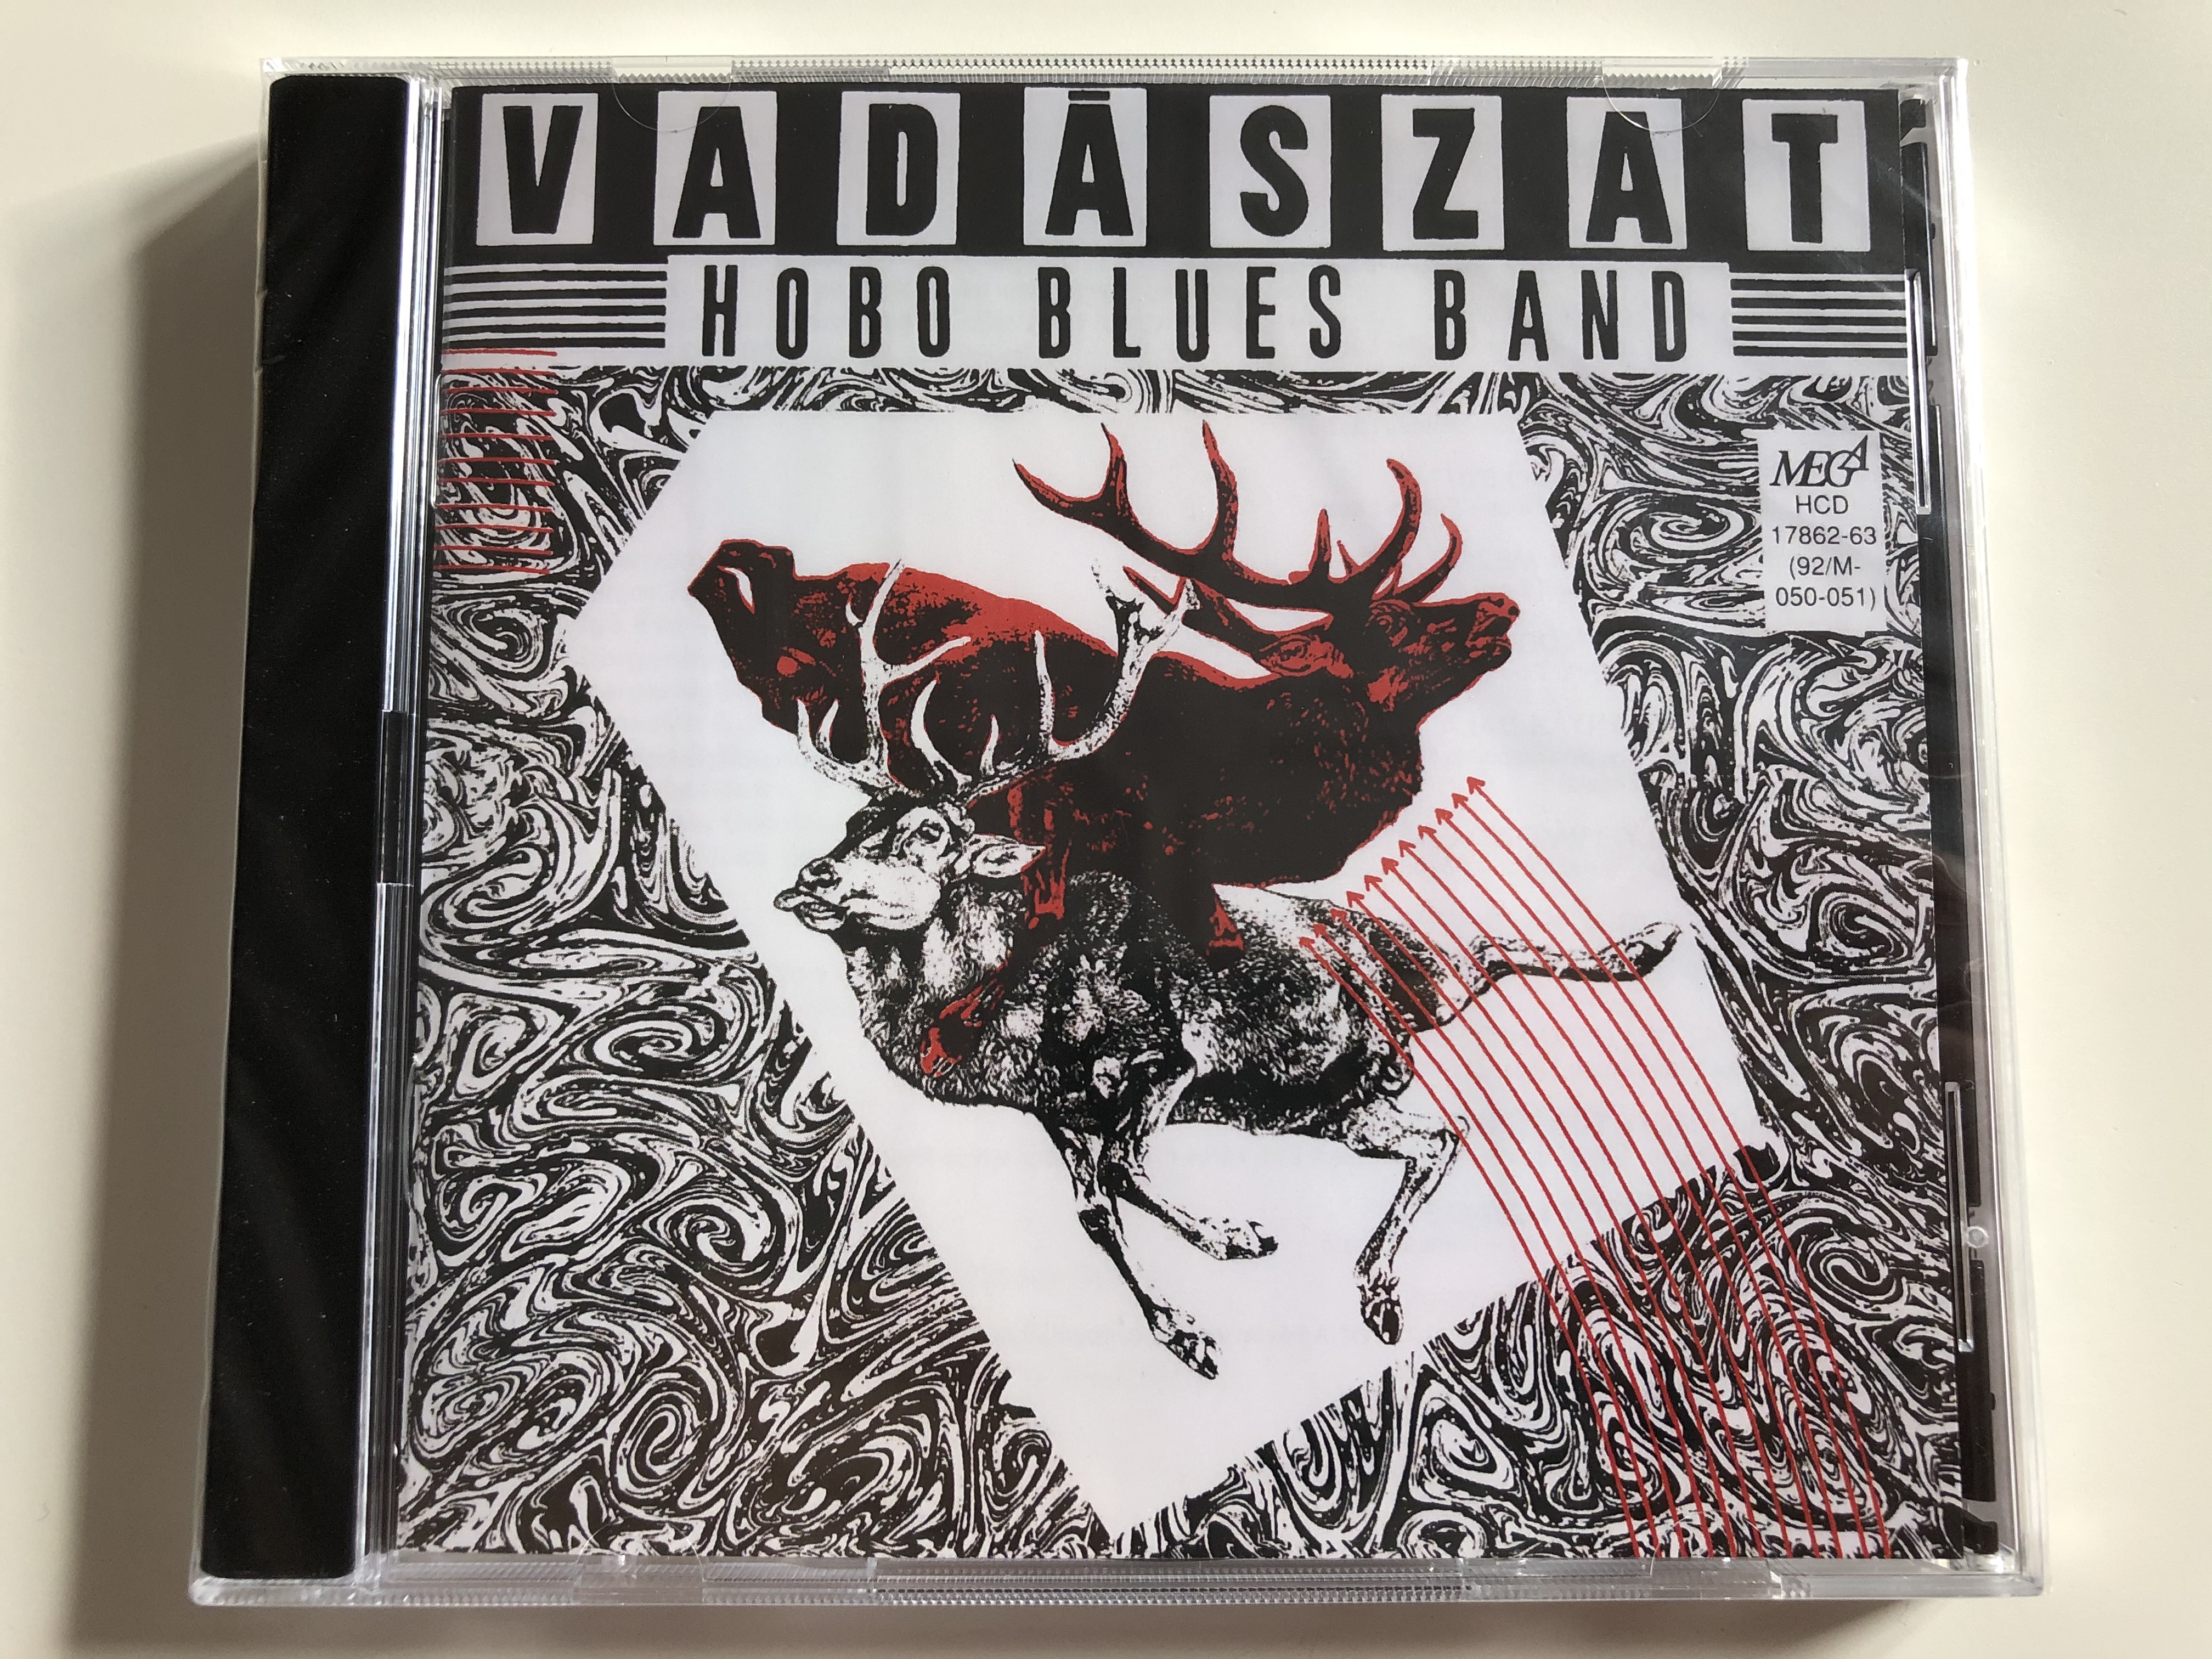 vad-szat-hobo-blues-band-mega-2x-audio-cd-hcd-17862-63-92m-050-051-1-.jpg